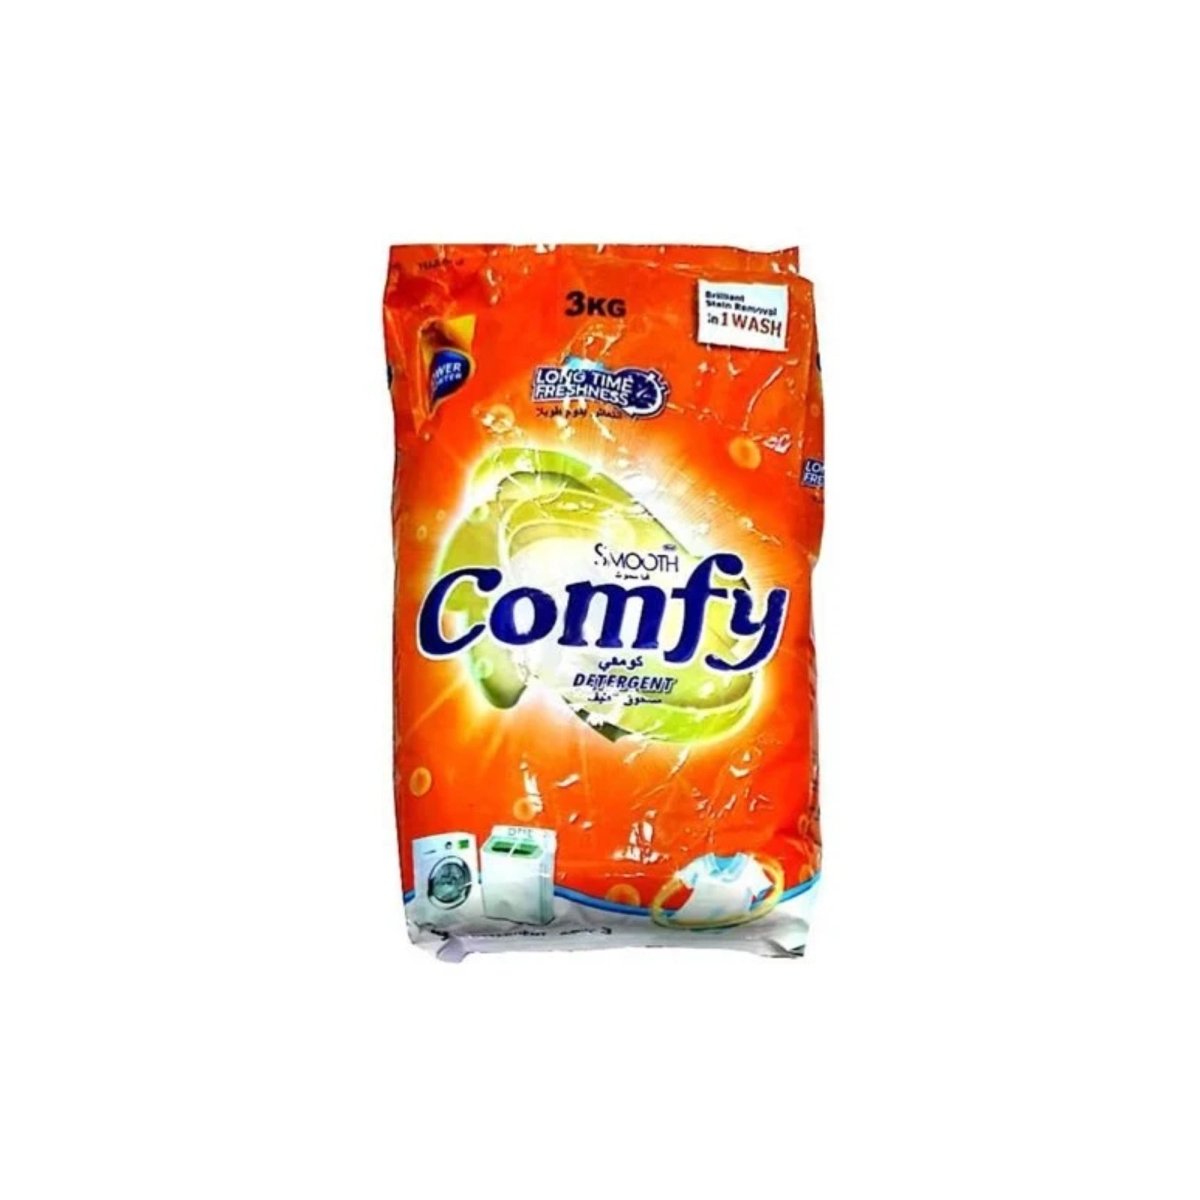 Comfy Detergent - Tulsidas